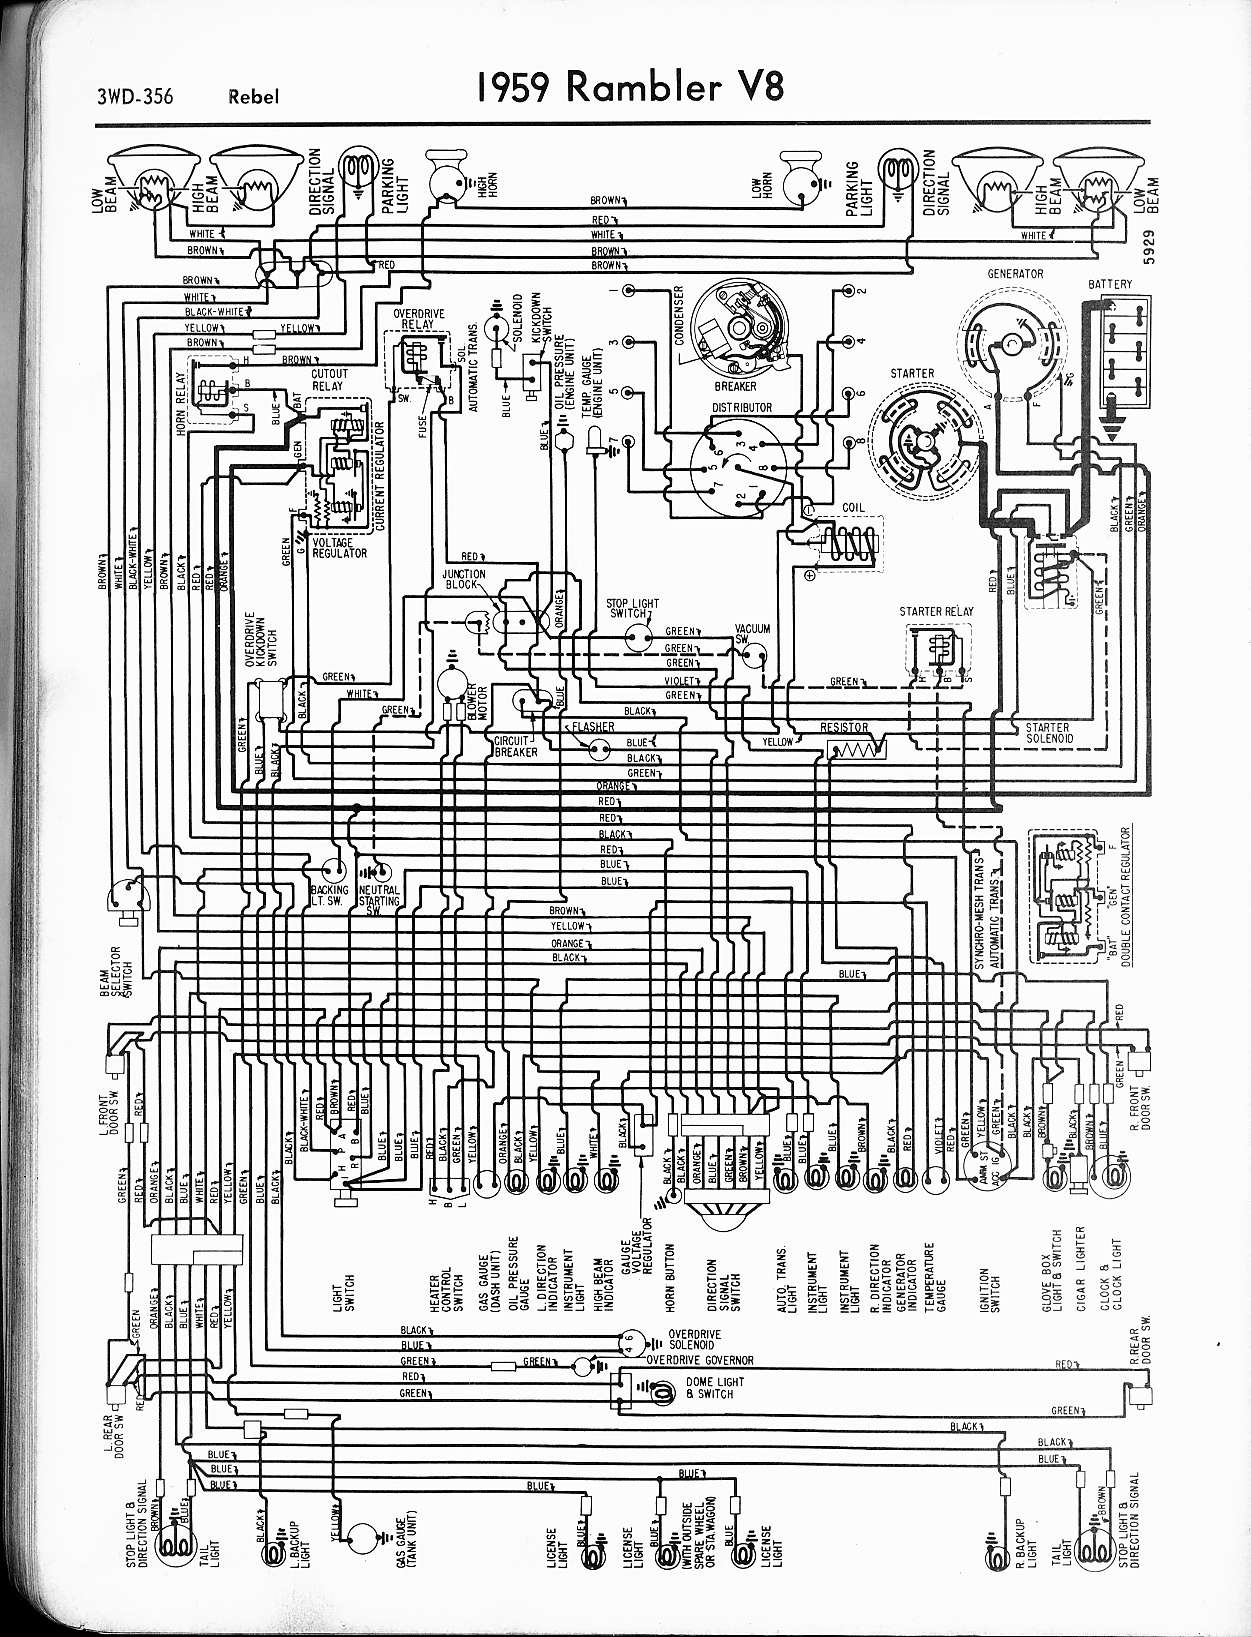 Rambler wiring diagrams - The Old Car Manual Project 1968 amc rebel wiring diagram 